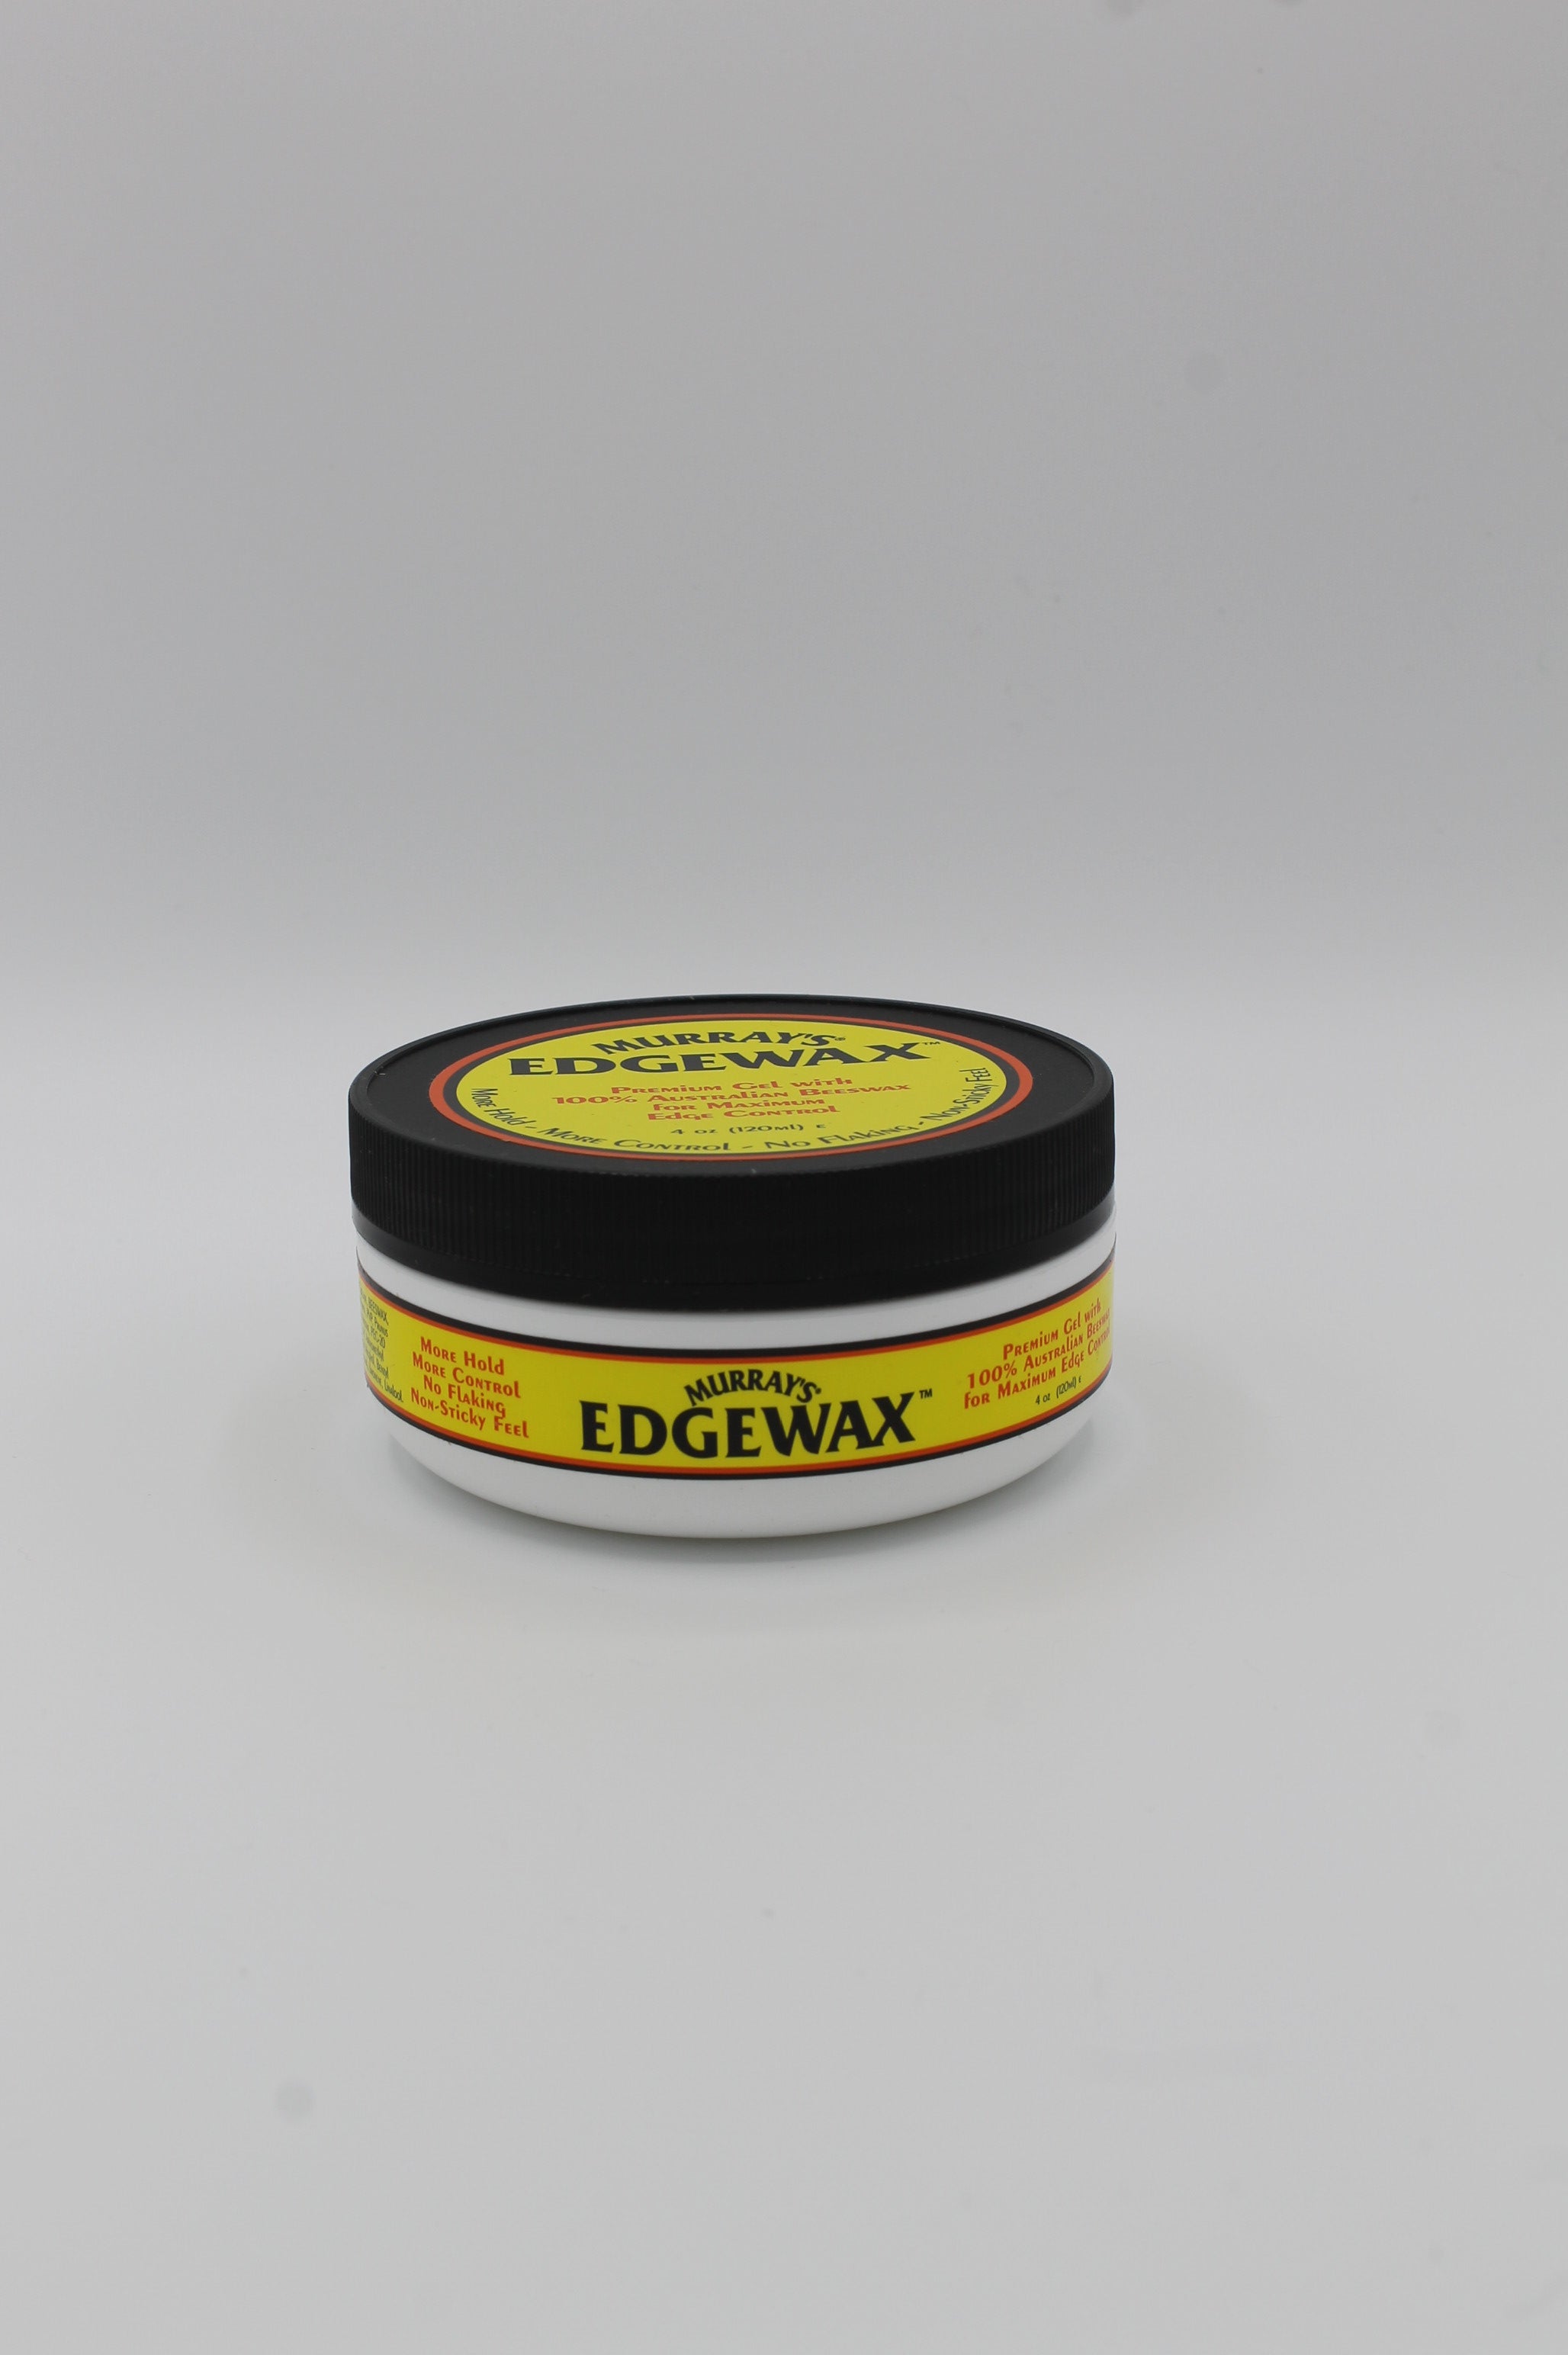 Murray's Edgewax Premium Gel, 4 oz